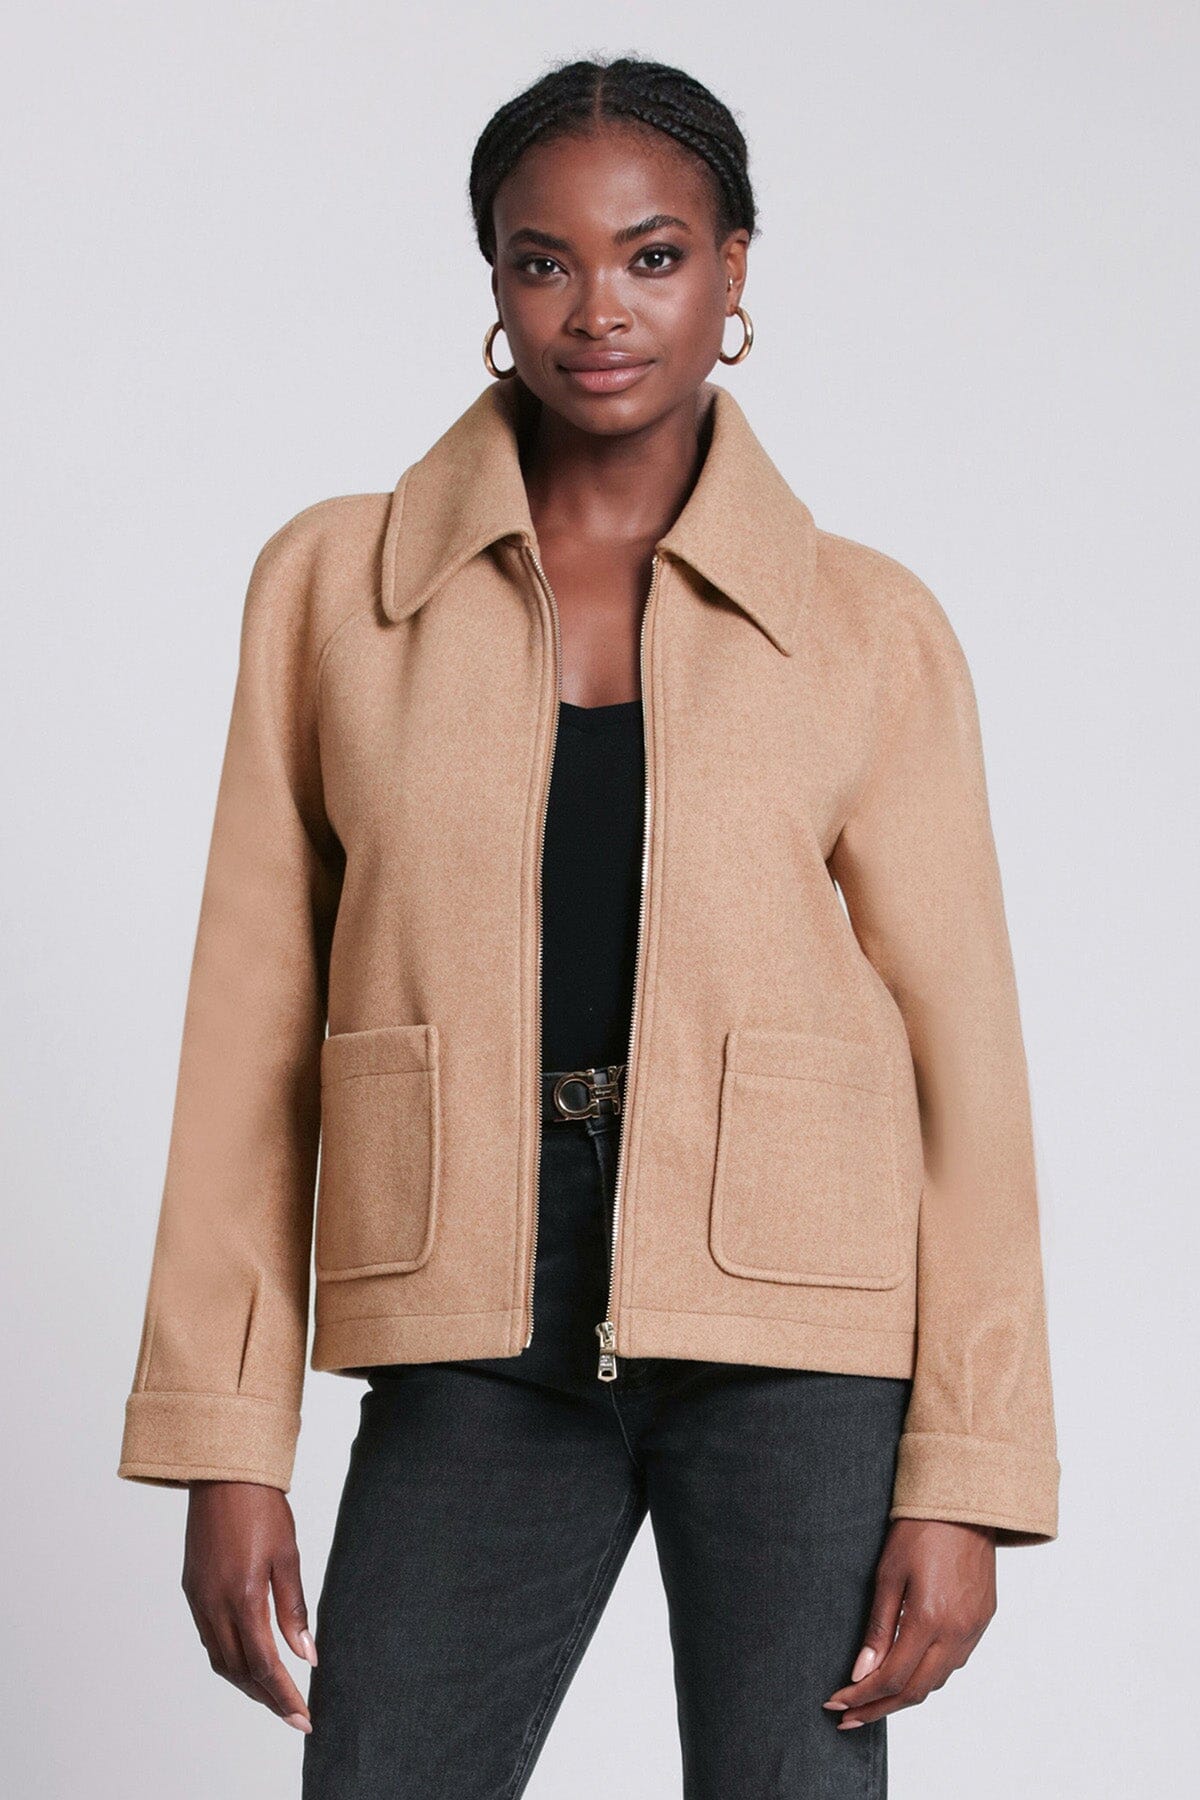 relaxed zip front jacket coat camel beige - women's flattering designer fashion office to date night coats jackets